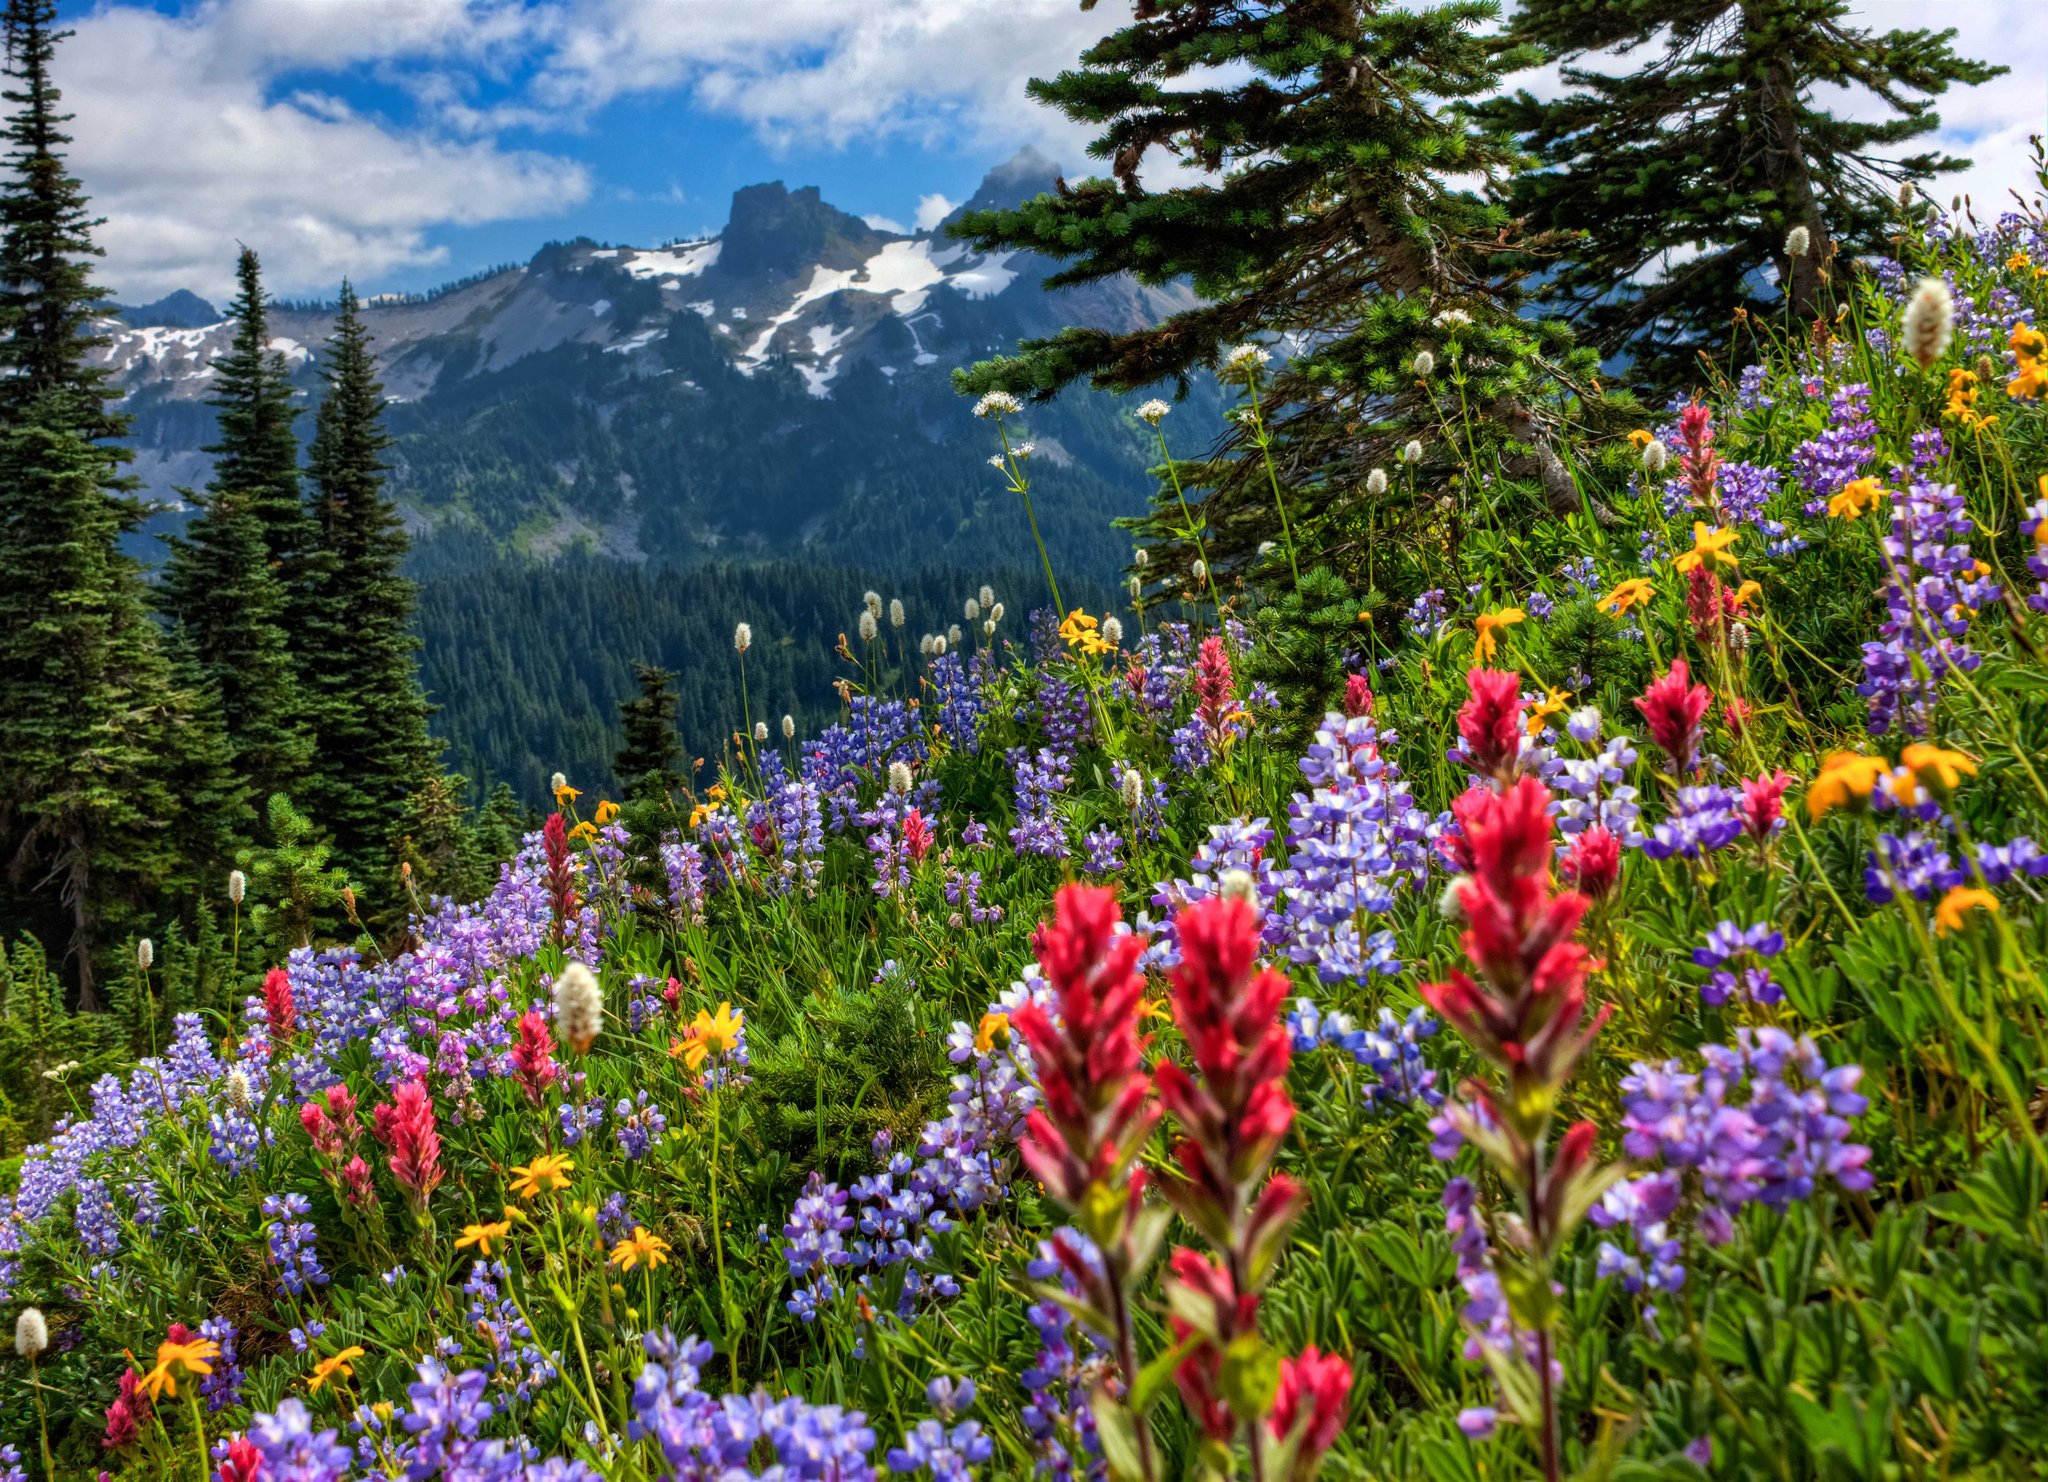  Rainier National Park mountains meadow flowers wallpaper background